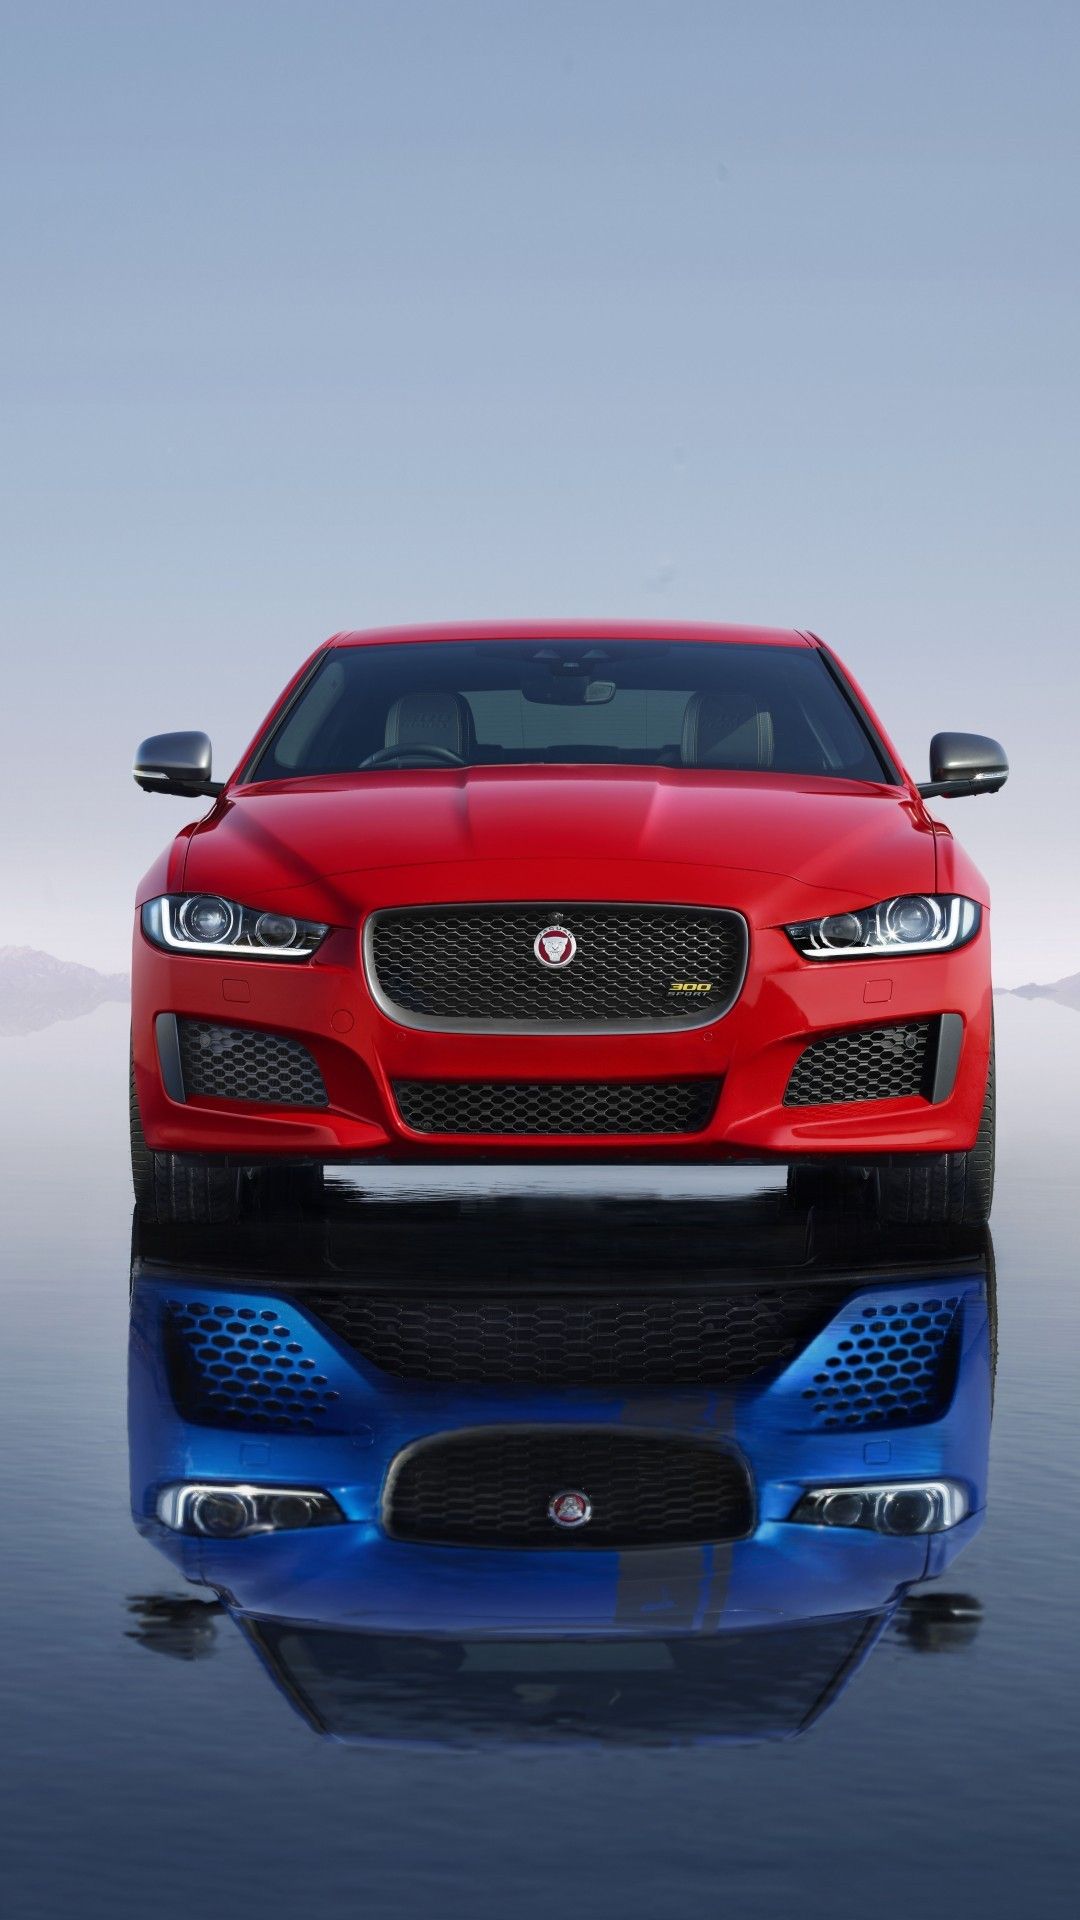 Download 1080x1920 Jaguar Xe 300 Sport, Red, Front View